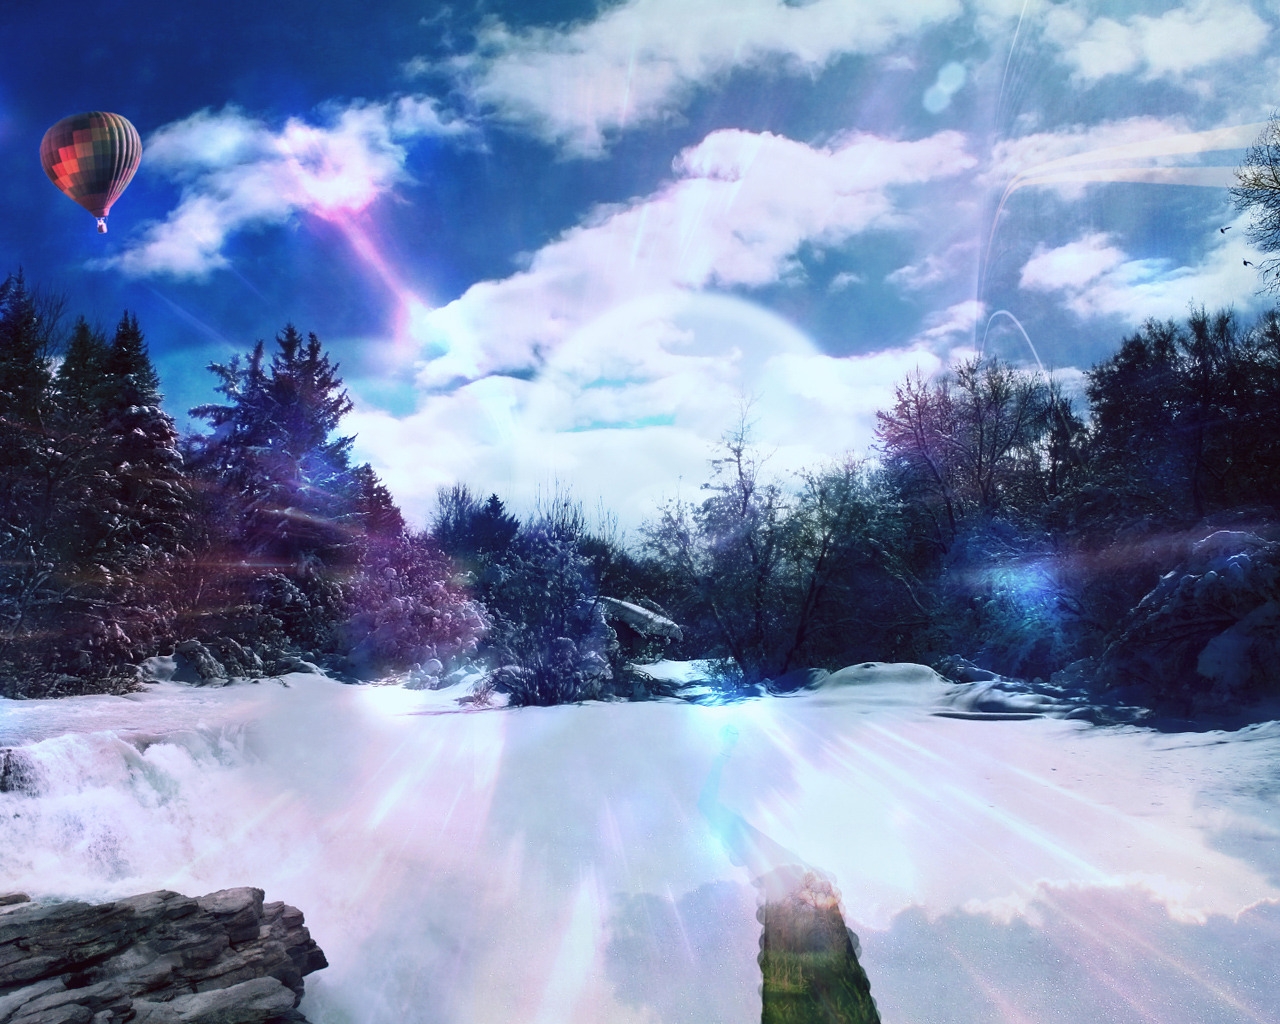 Snowy Dream for 1280 x 1024 resolution